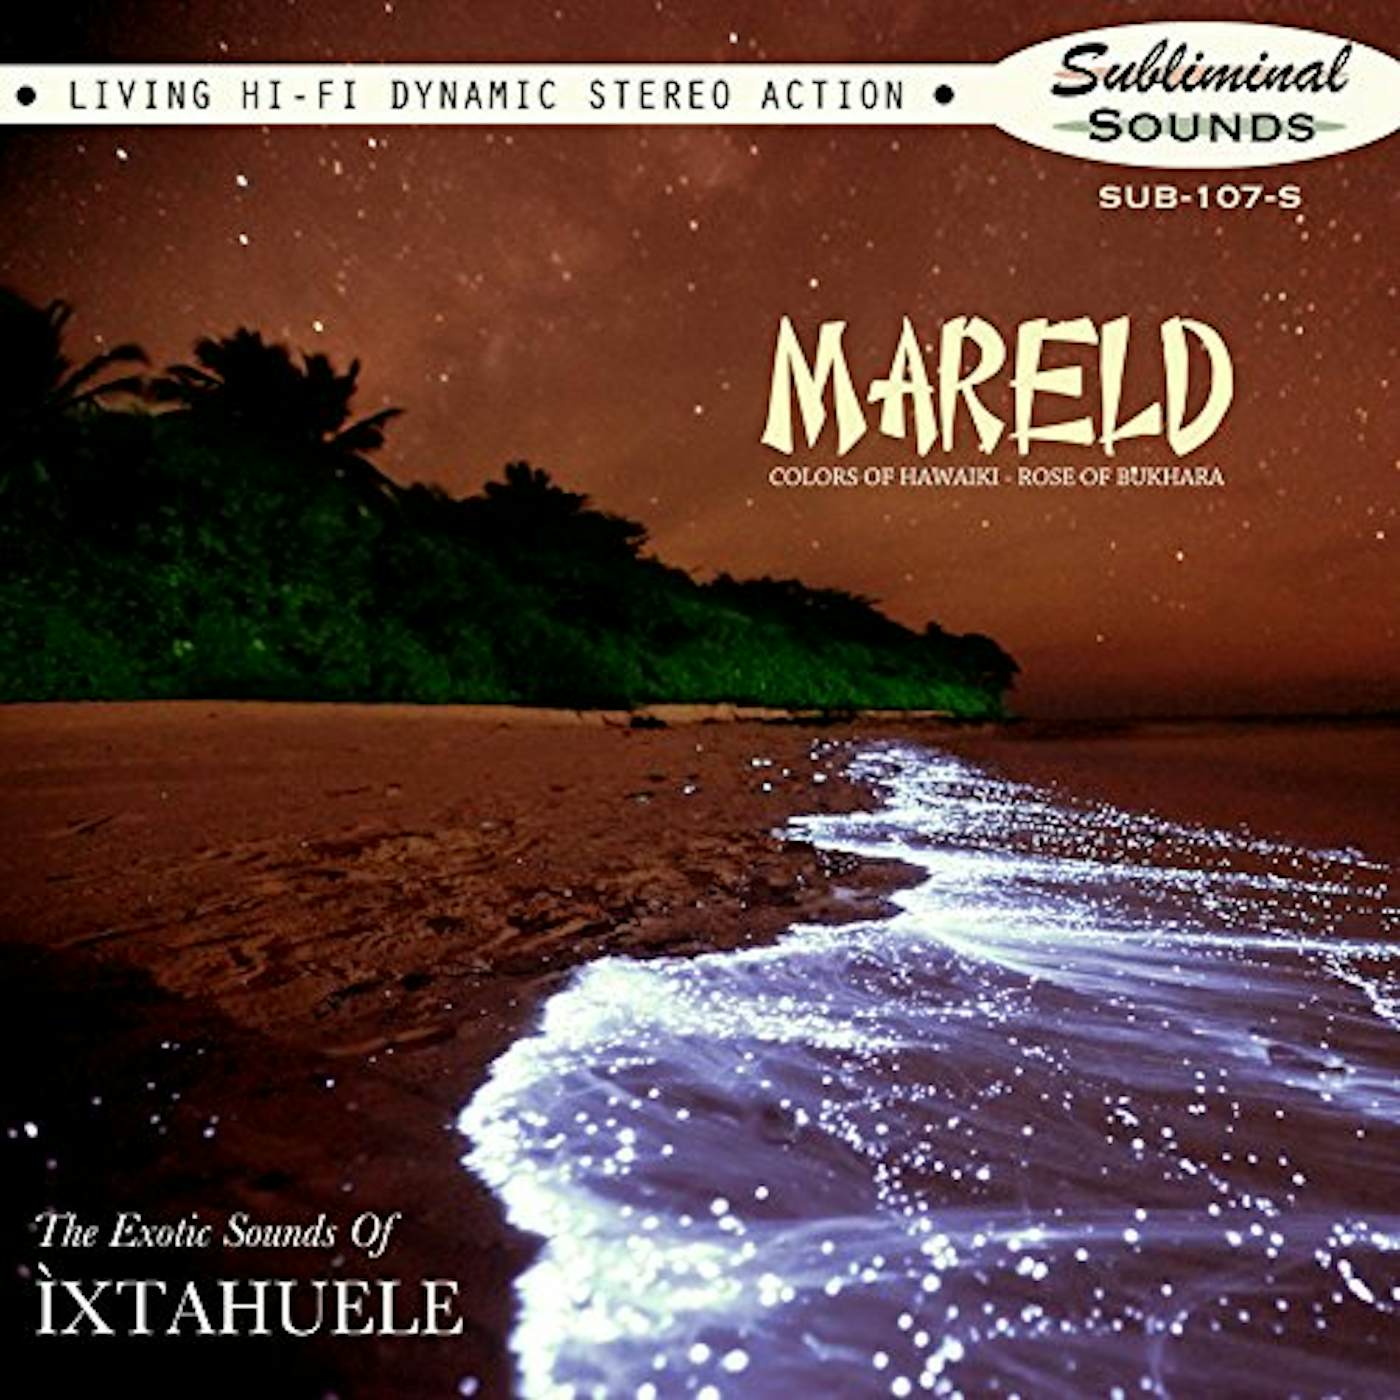 Ìxtahuele Mareld Vinyl Record